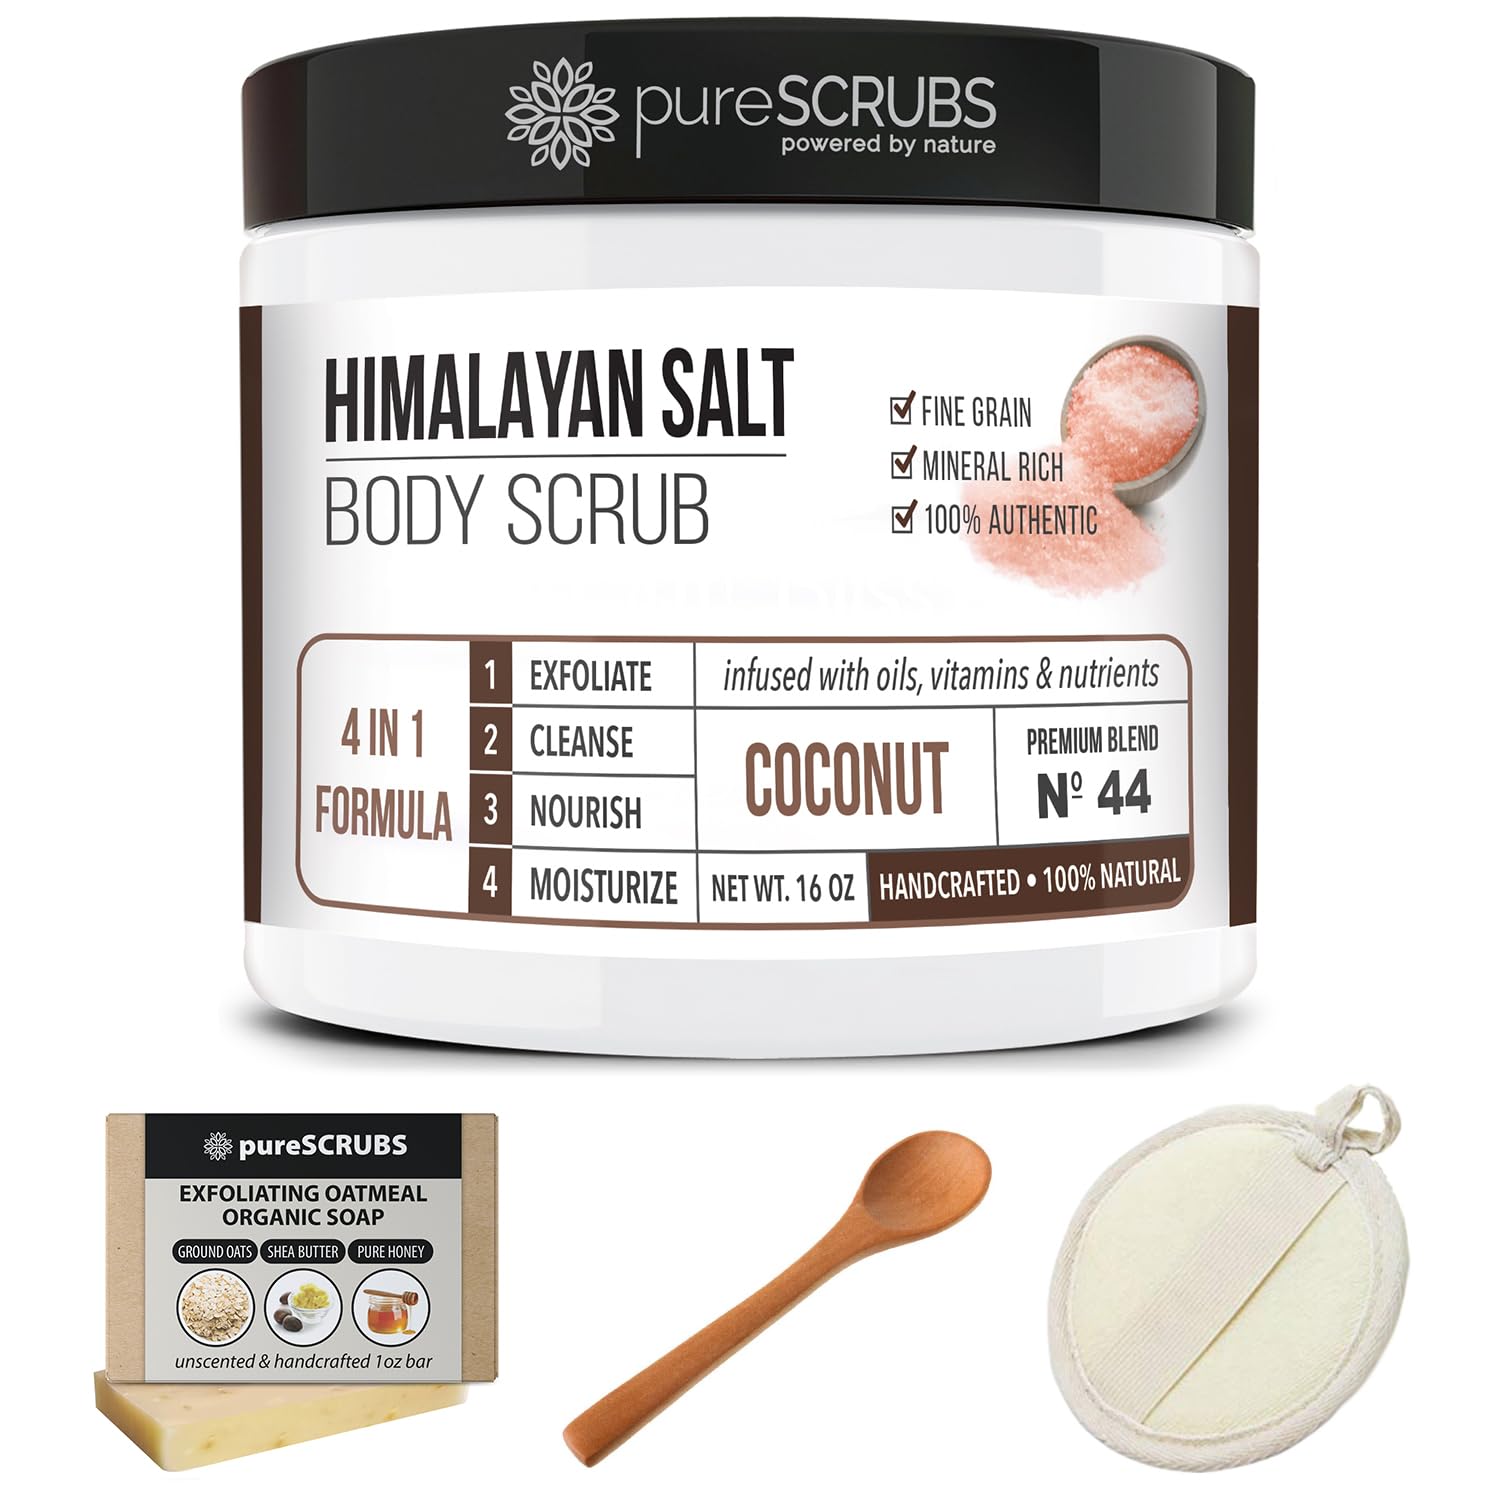 pureSCRUBS Premium Pink Himalayan Salt Body Scrub Set - Large 16 COCONUT SCRUB, Organic Essential Oils & Nutrients INCLUDES Wooden Stirring Spoon, Loofah & Mini Exfoliating Bar Soap